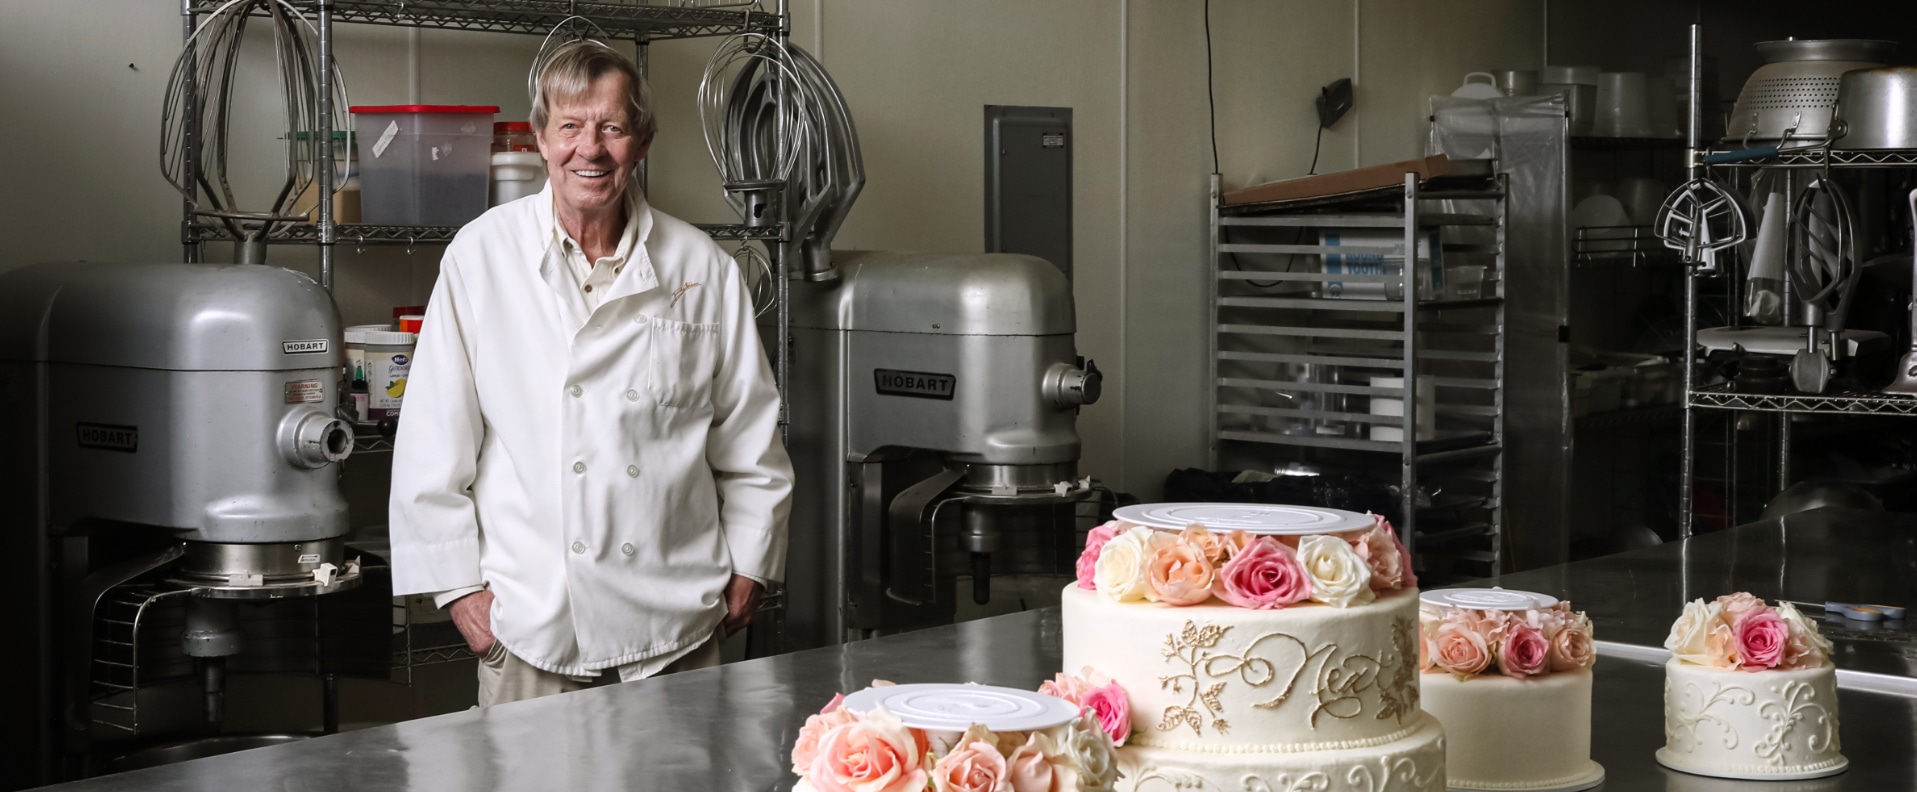 David Mess, Buttercream Cakes - Built By Business